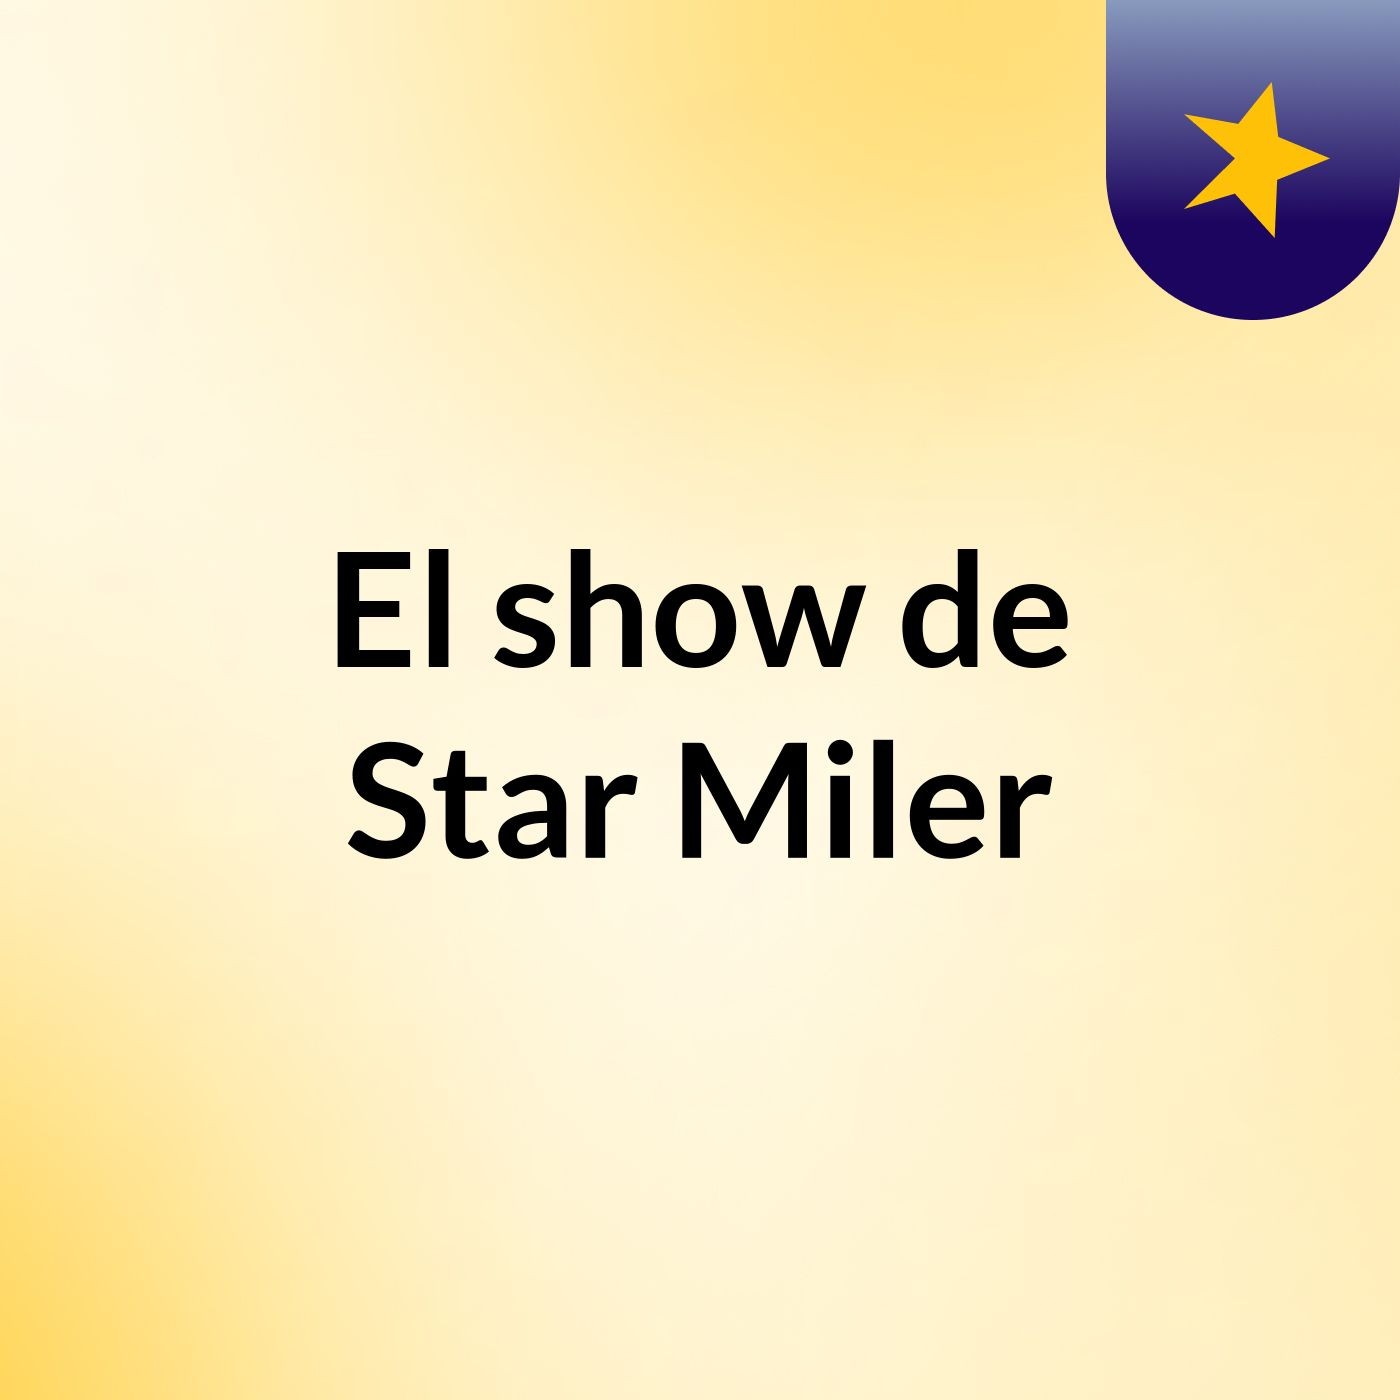 El show de Star Miler